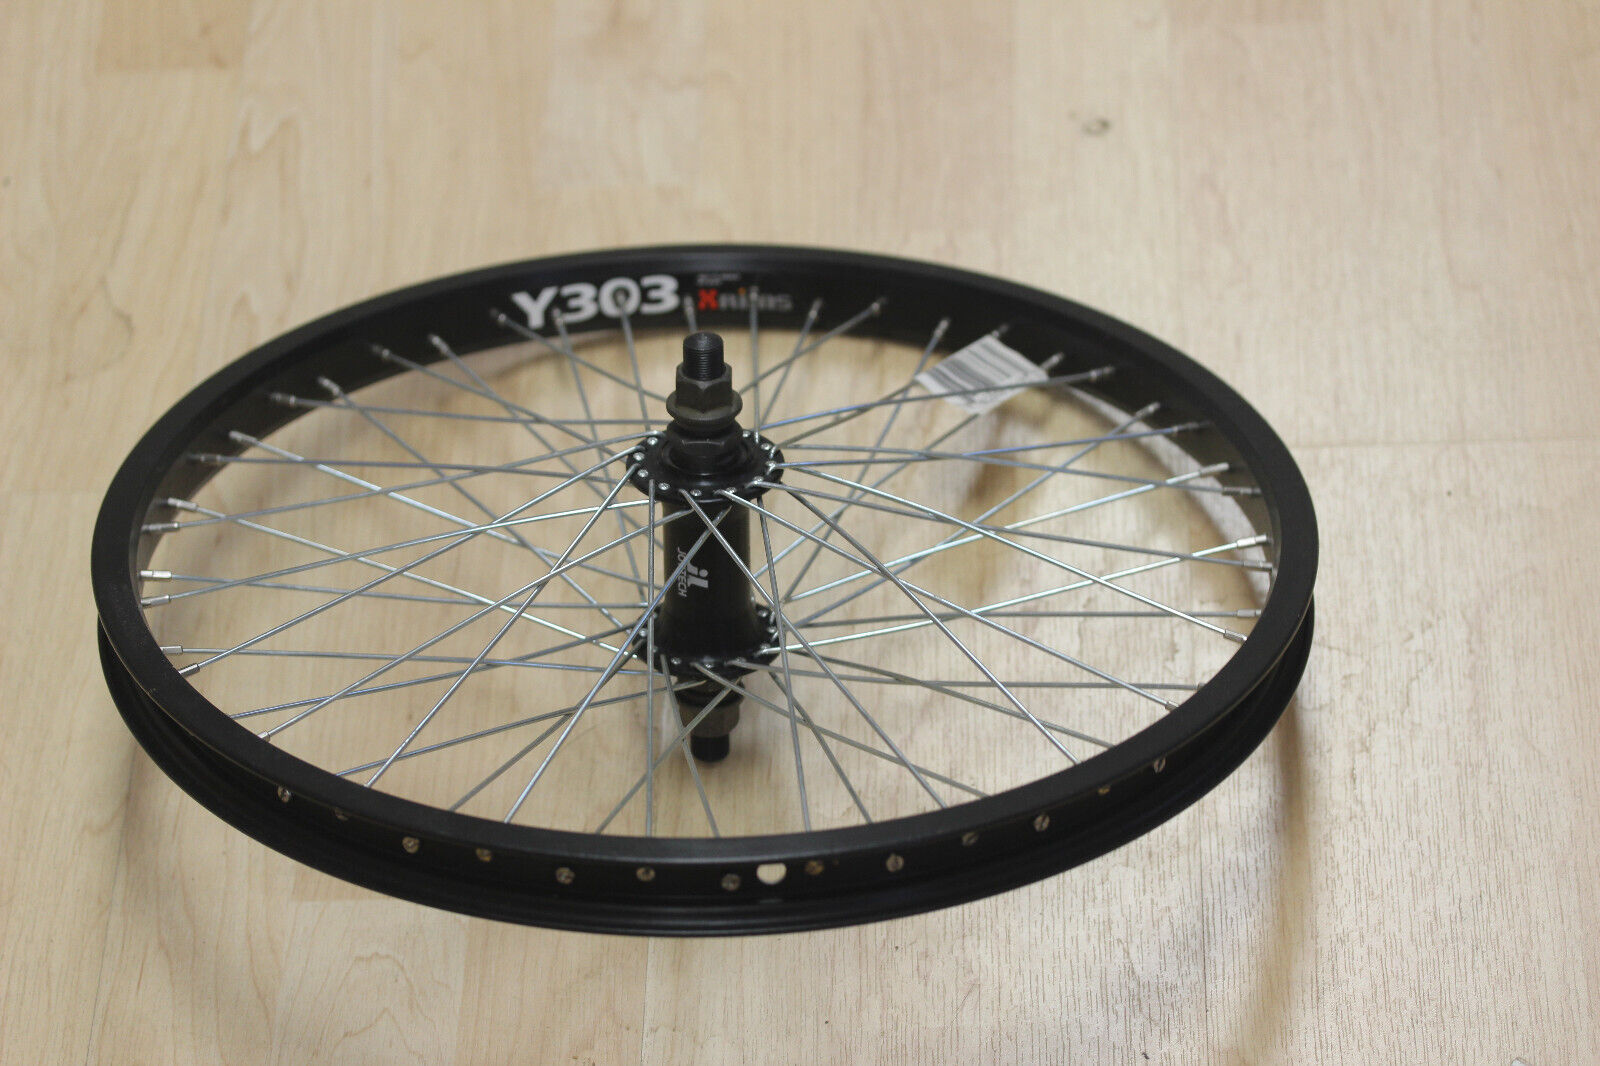 Y303 406x24 Rim Black Alloy Bicycle Wheel Front W/joytech Hu